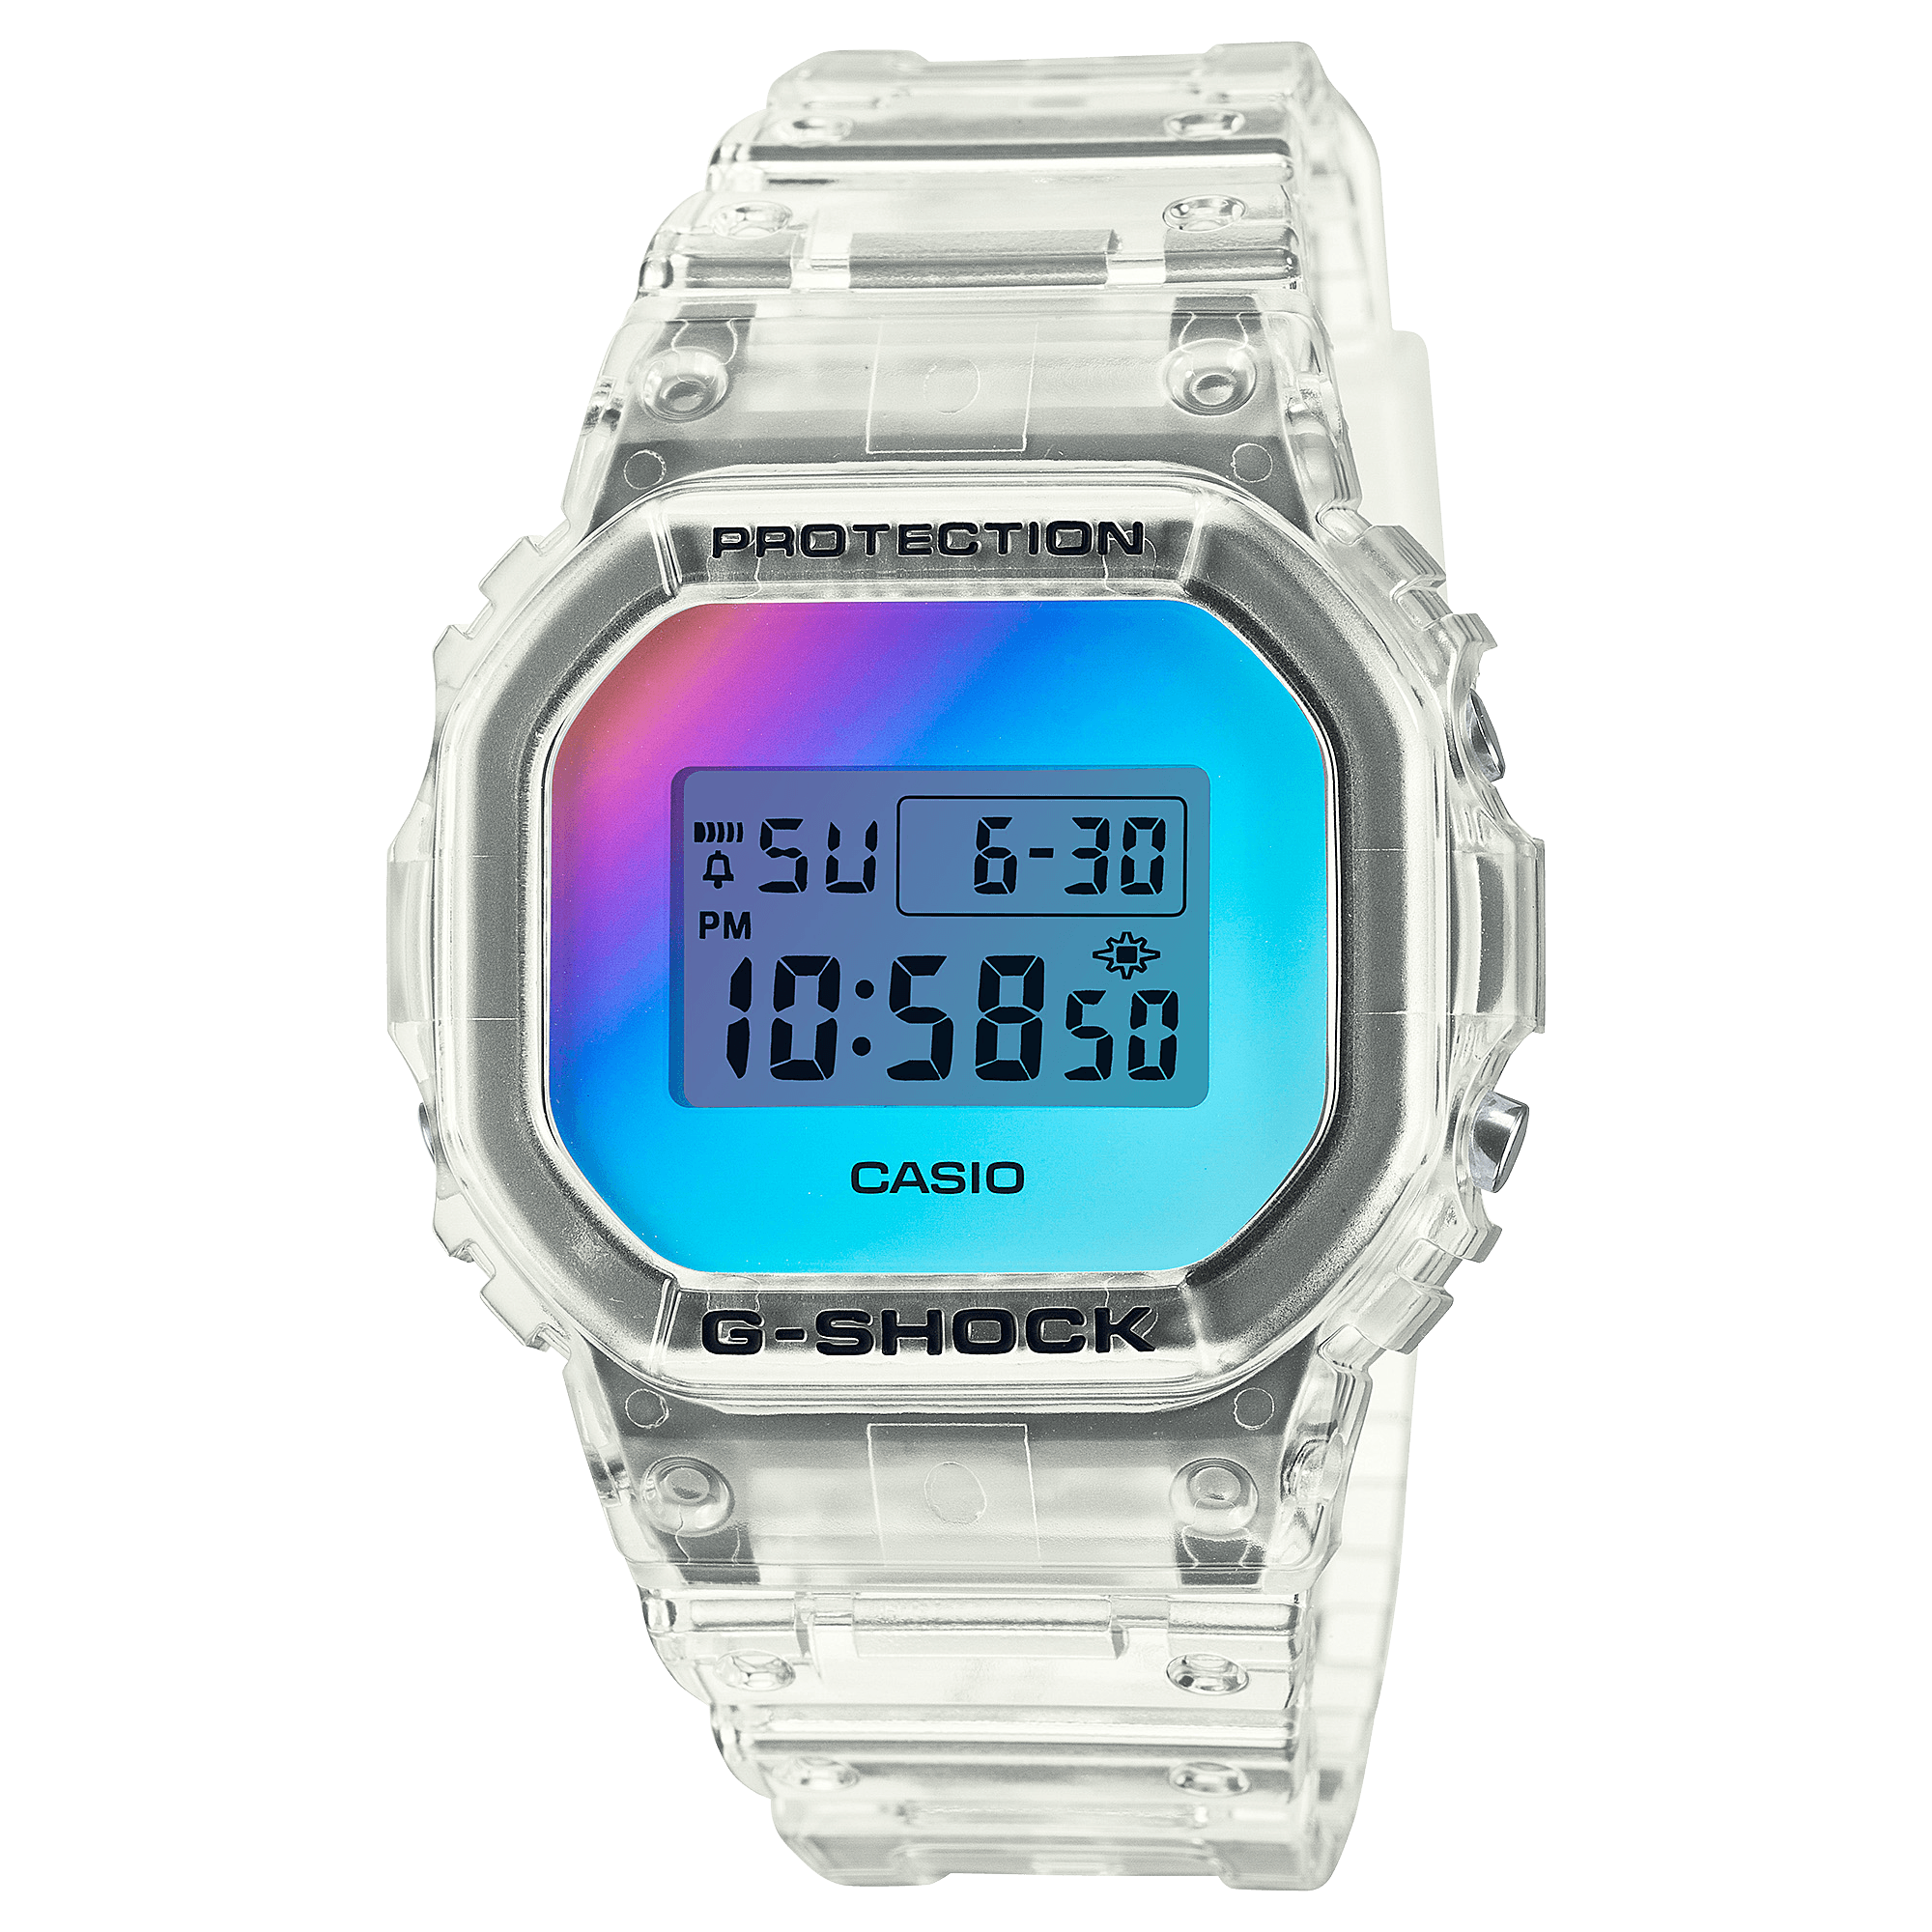 Digital 5600 Series DW5600SRS-7 Watch - Clear